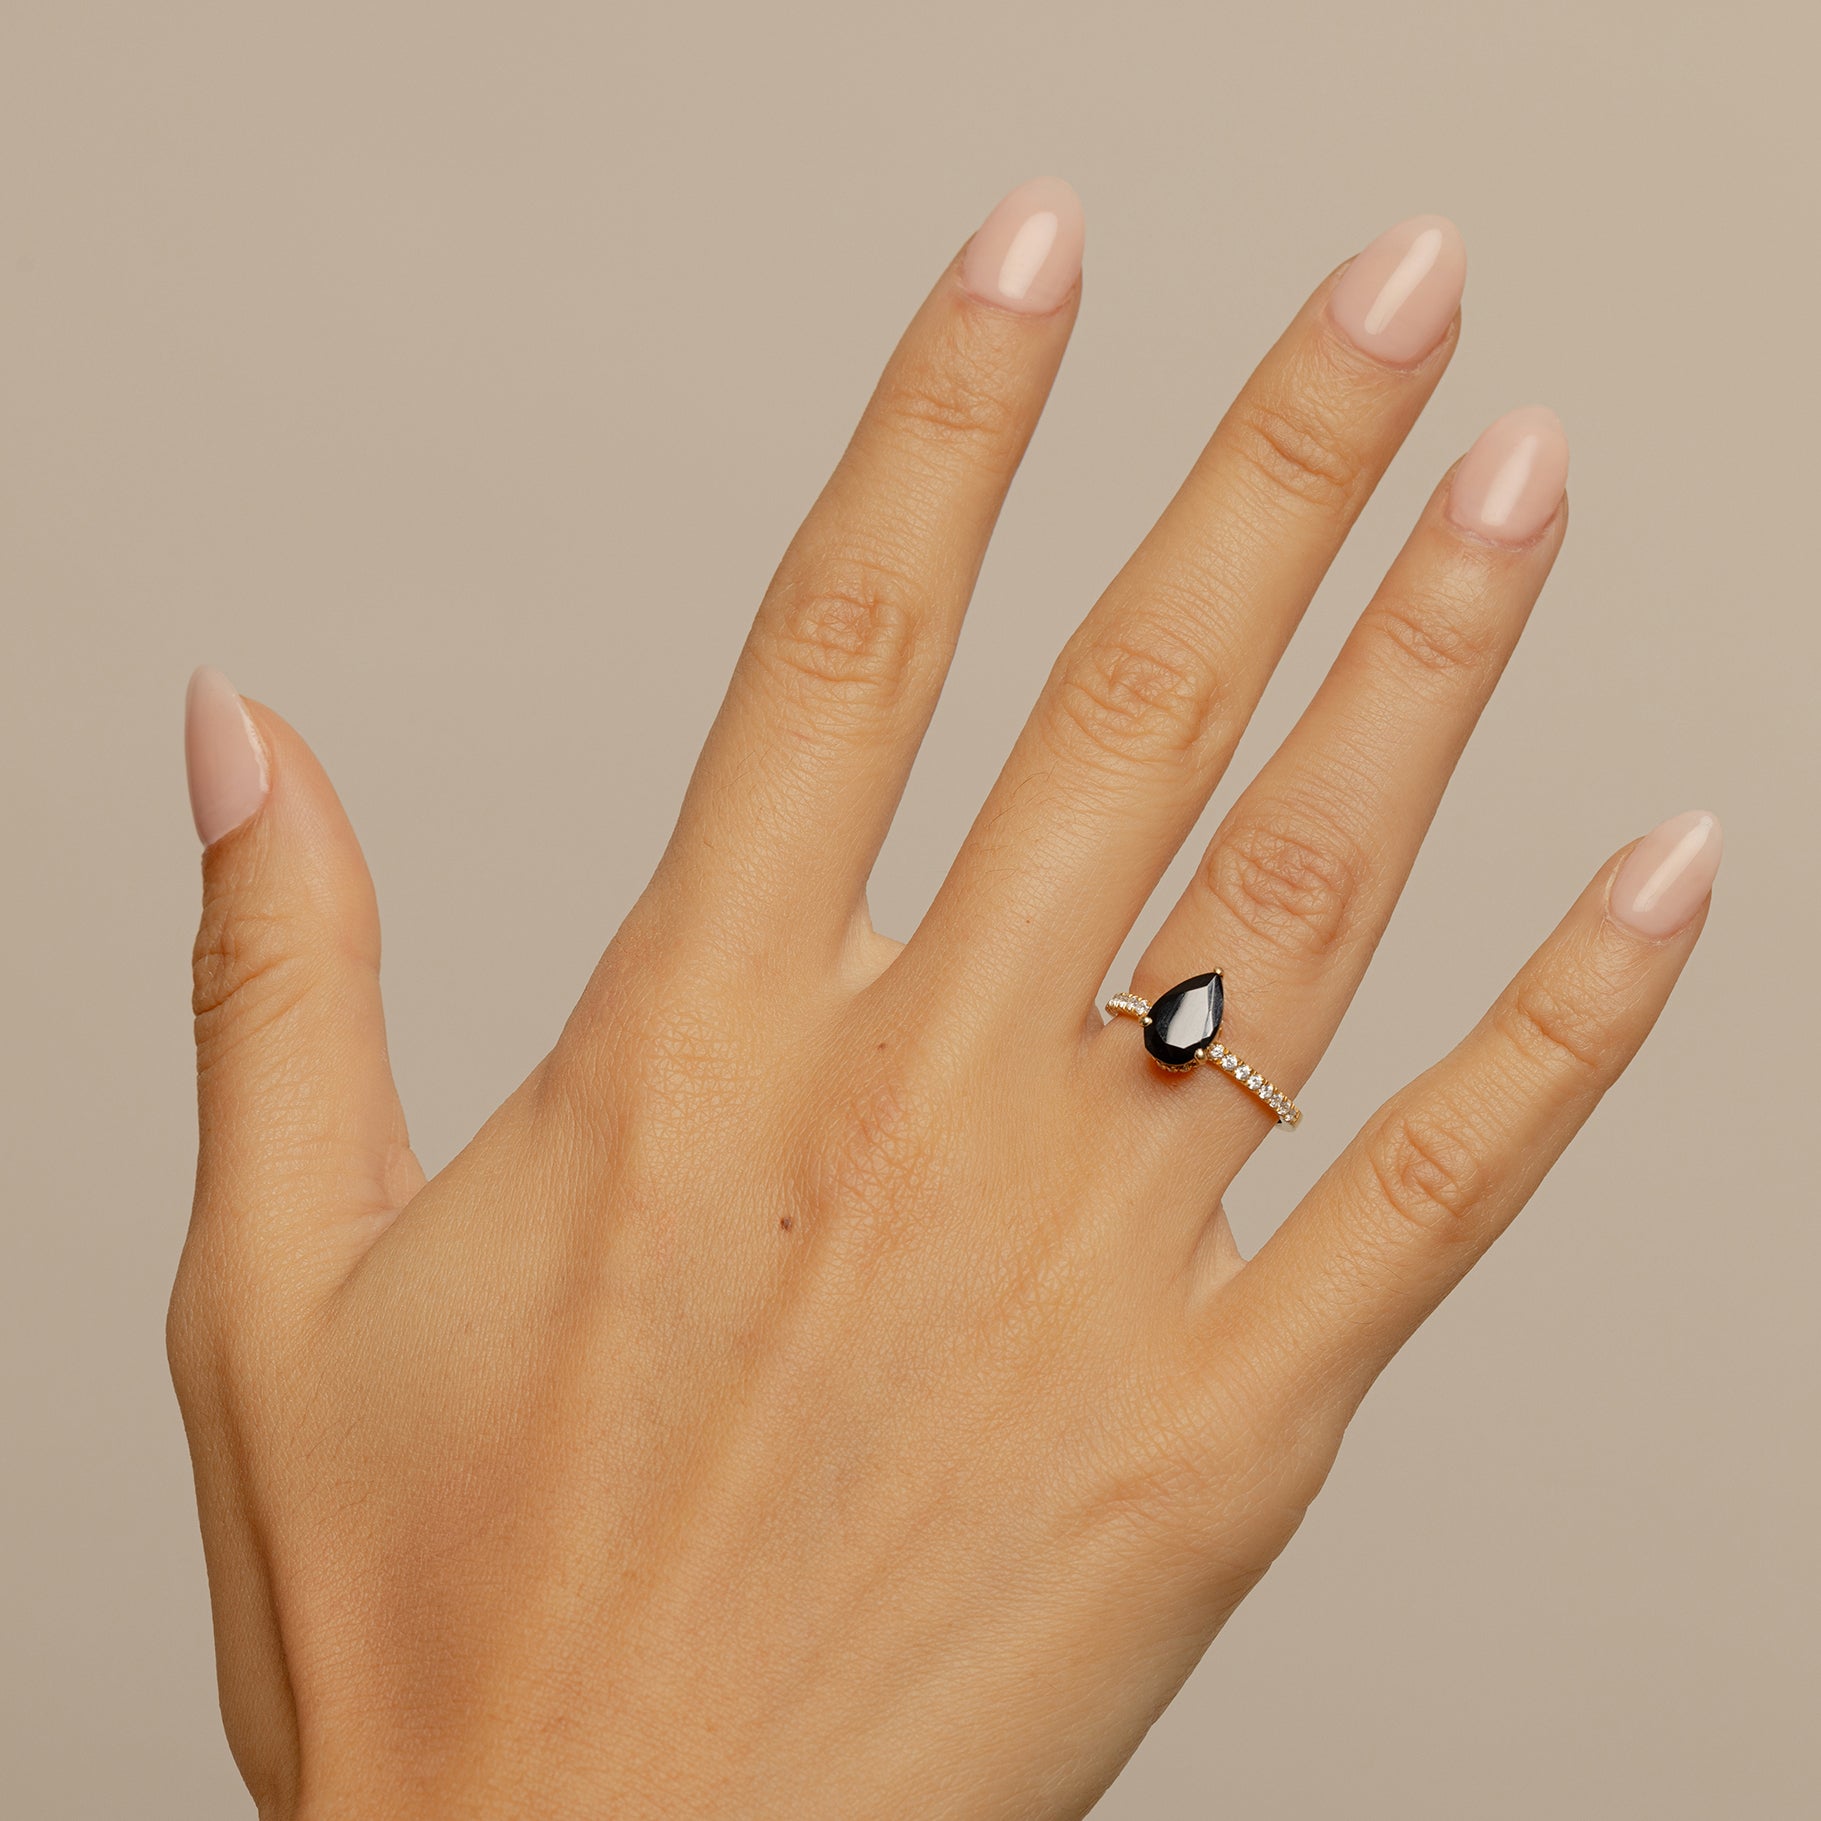 Lab-created Black Diamond Engagement Ring On Body